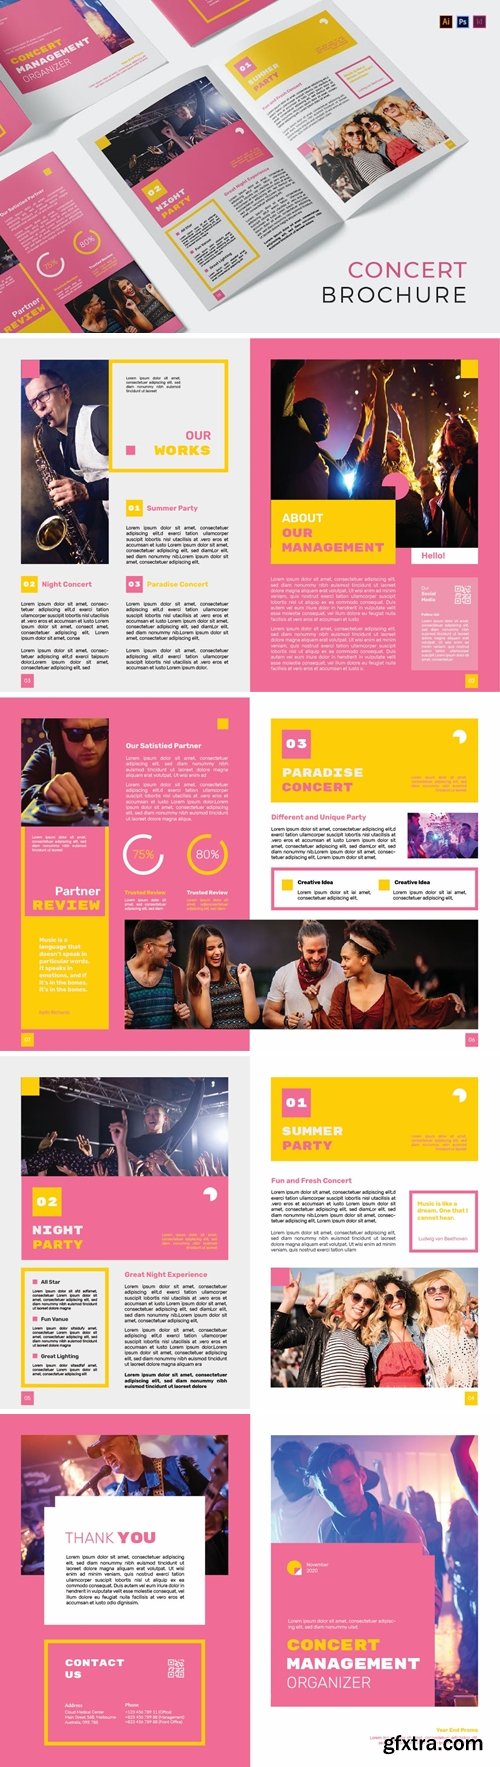 Concert Management Brochure YZA9S3F